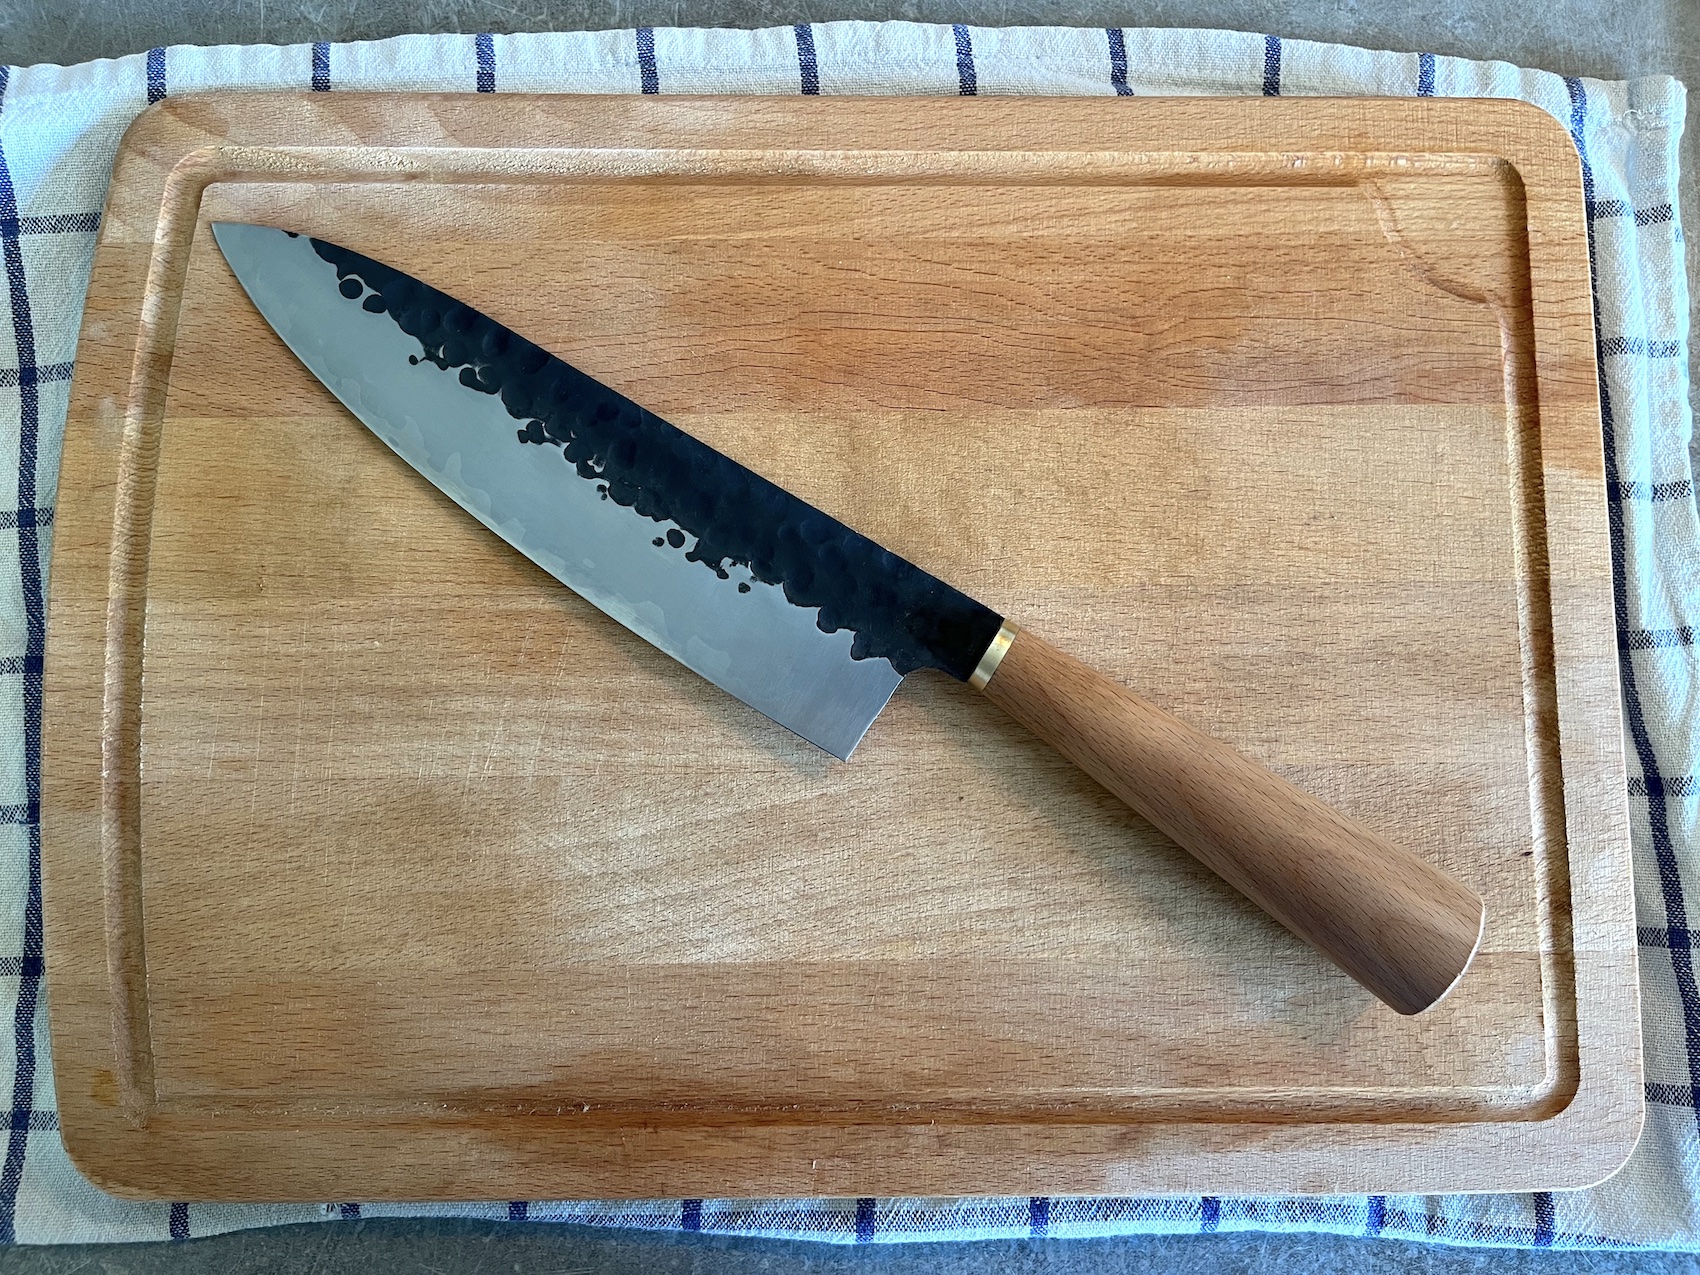 https://newcastleeats.co.uk/wp-content/uploads/2022/07/katto-chefs-knife.jpg